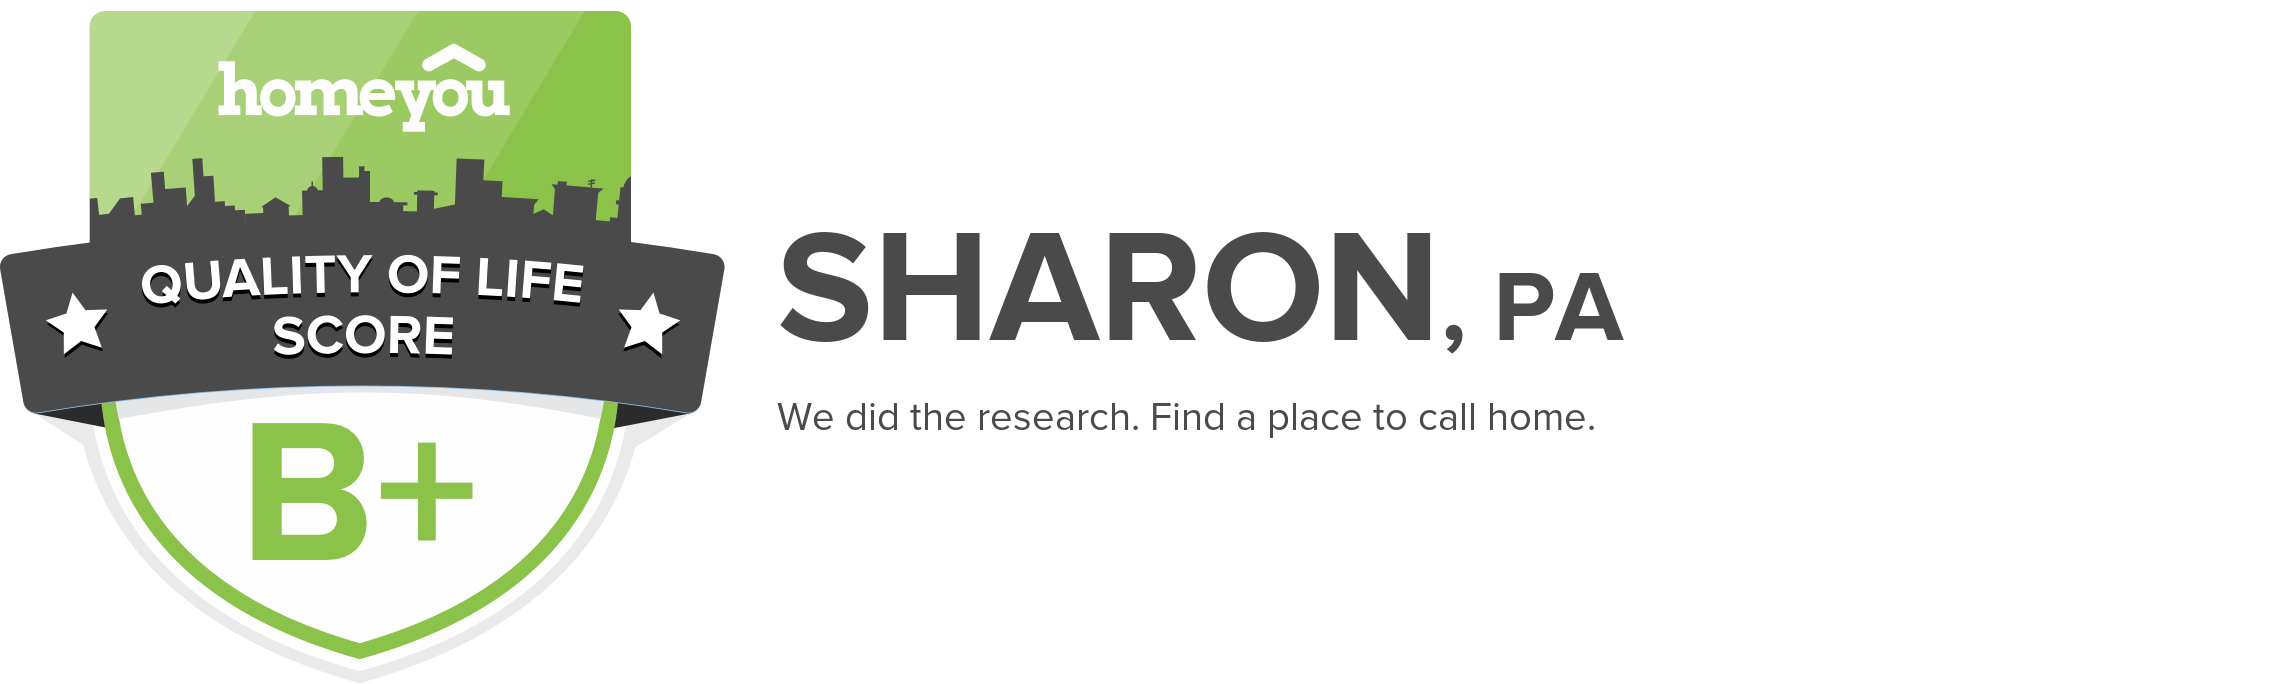 Sharon, PA